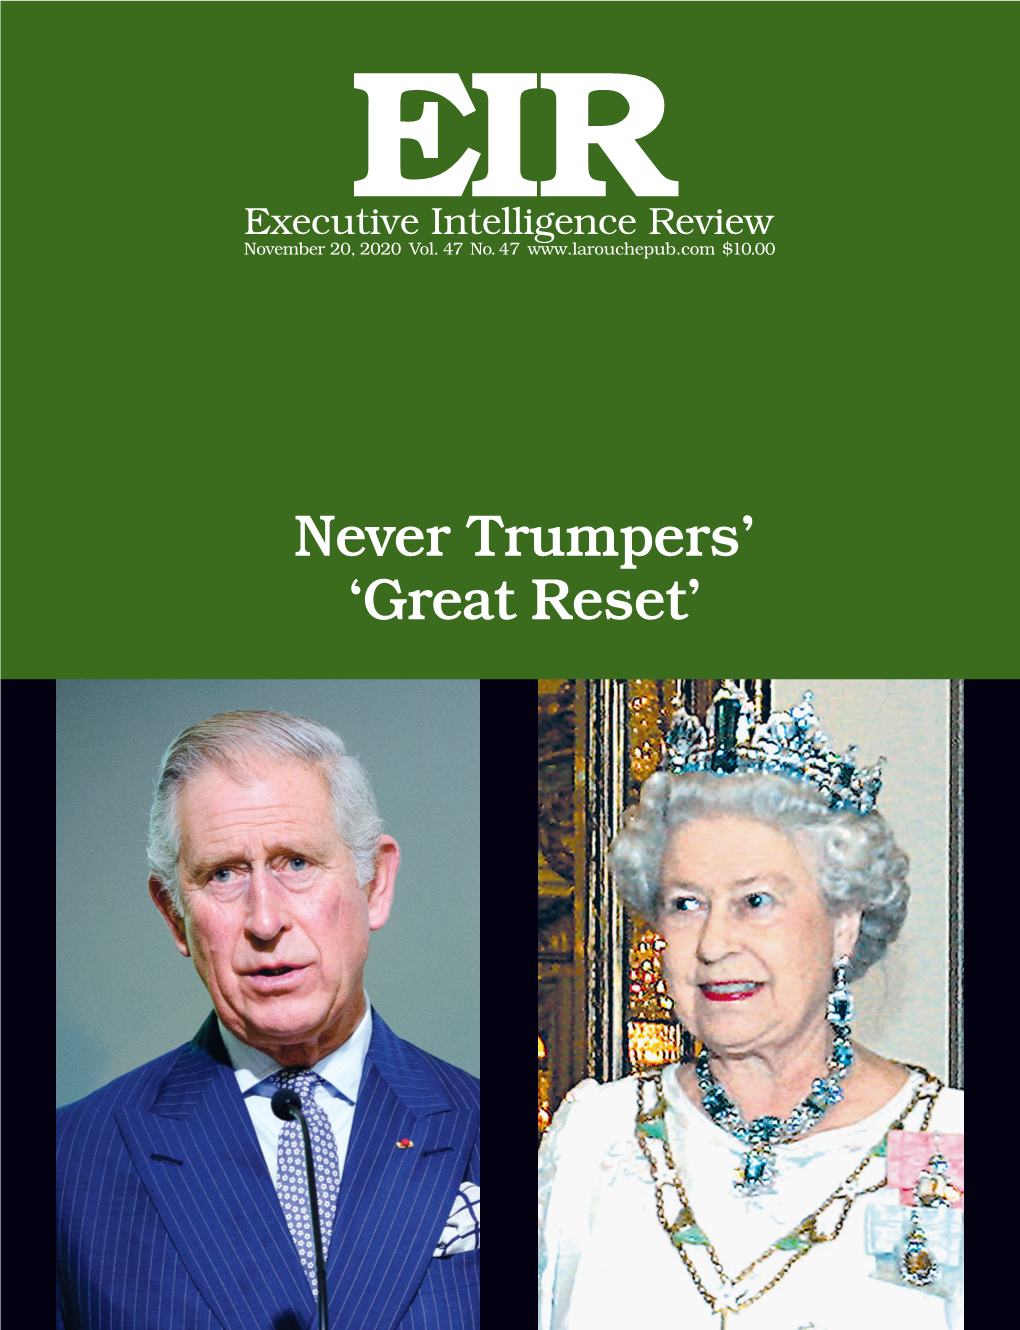 Never Trumpers' 'Great Reset'